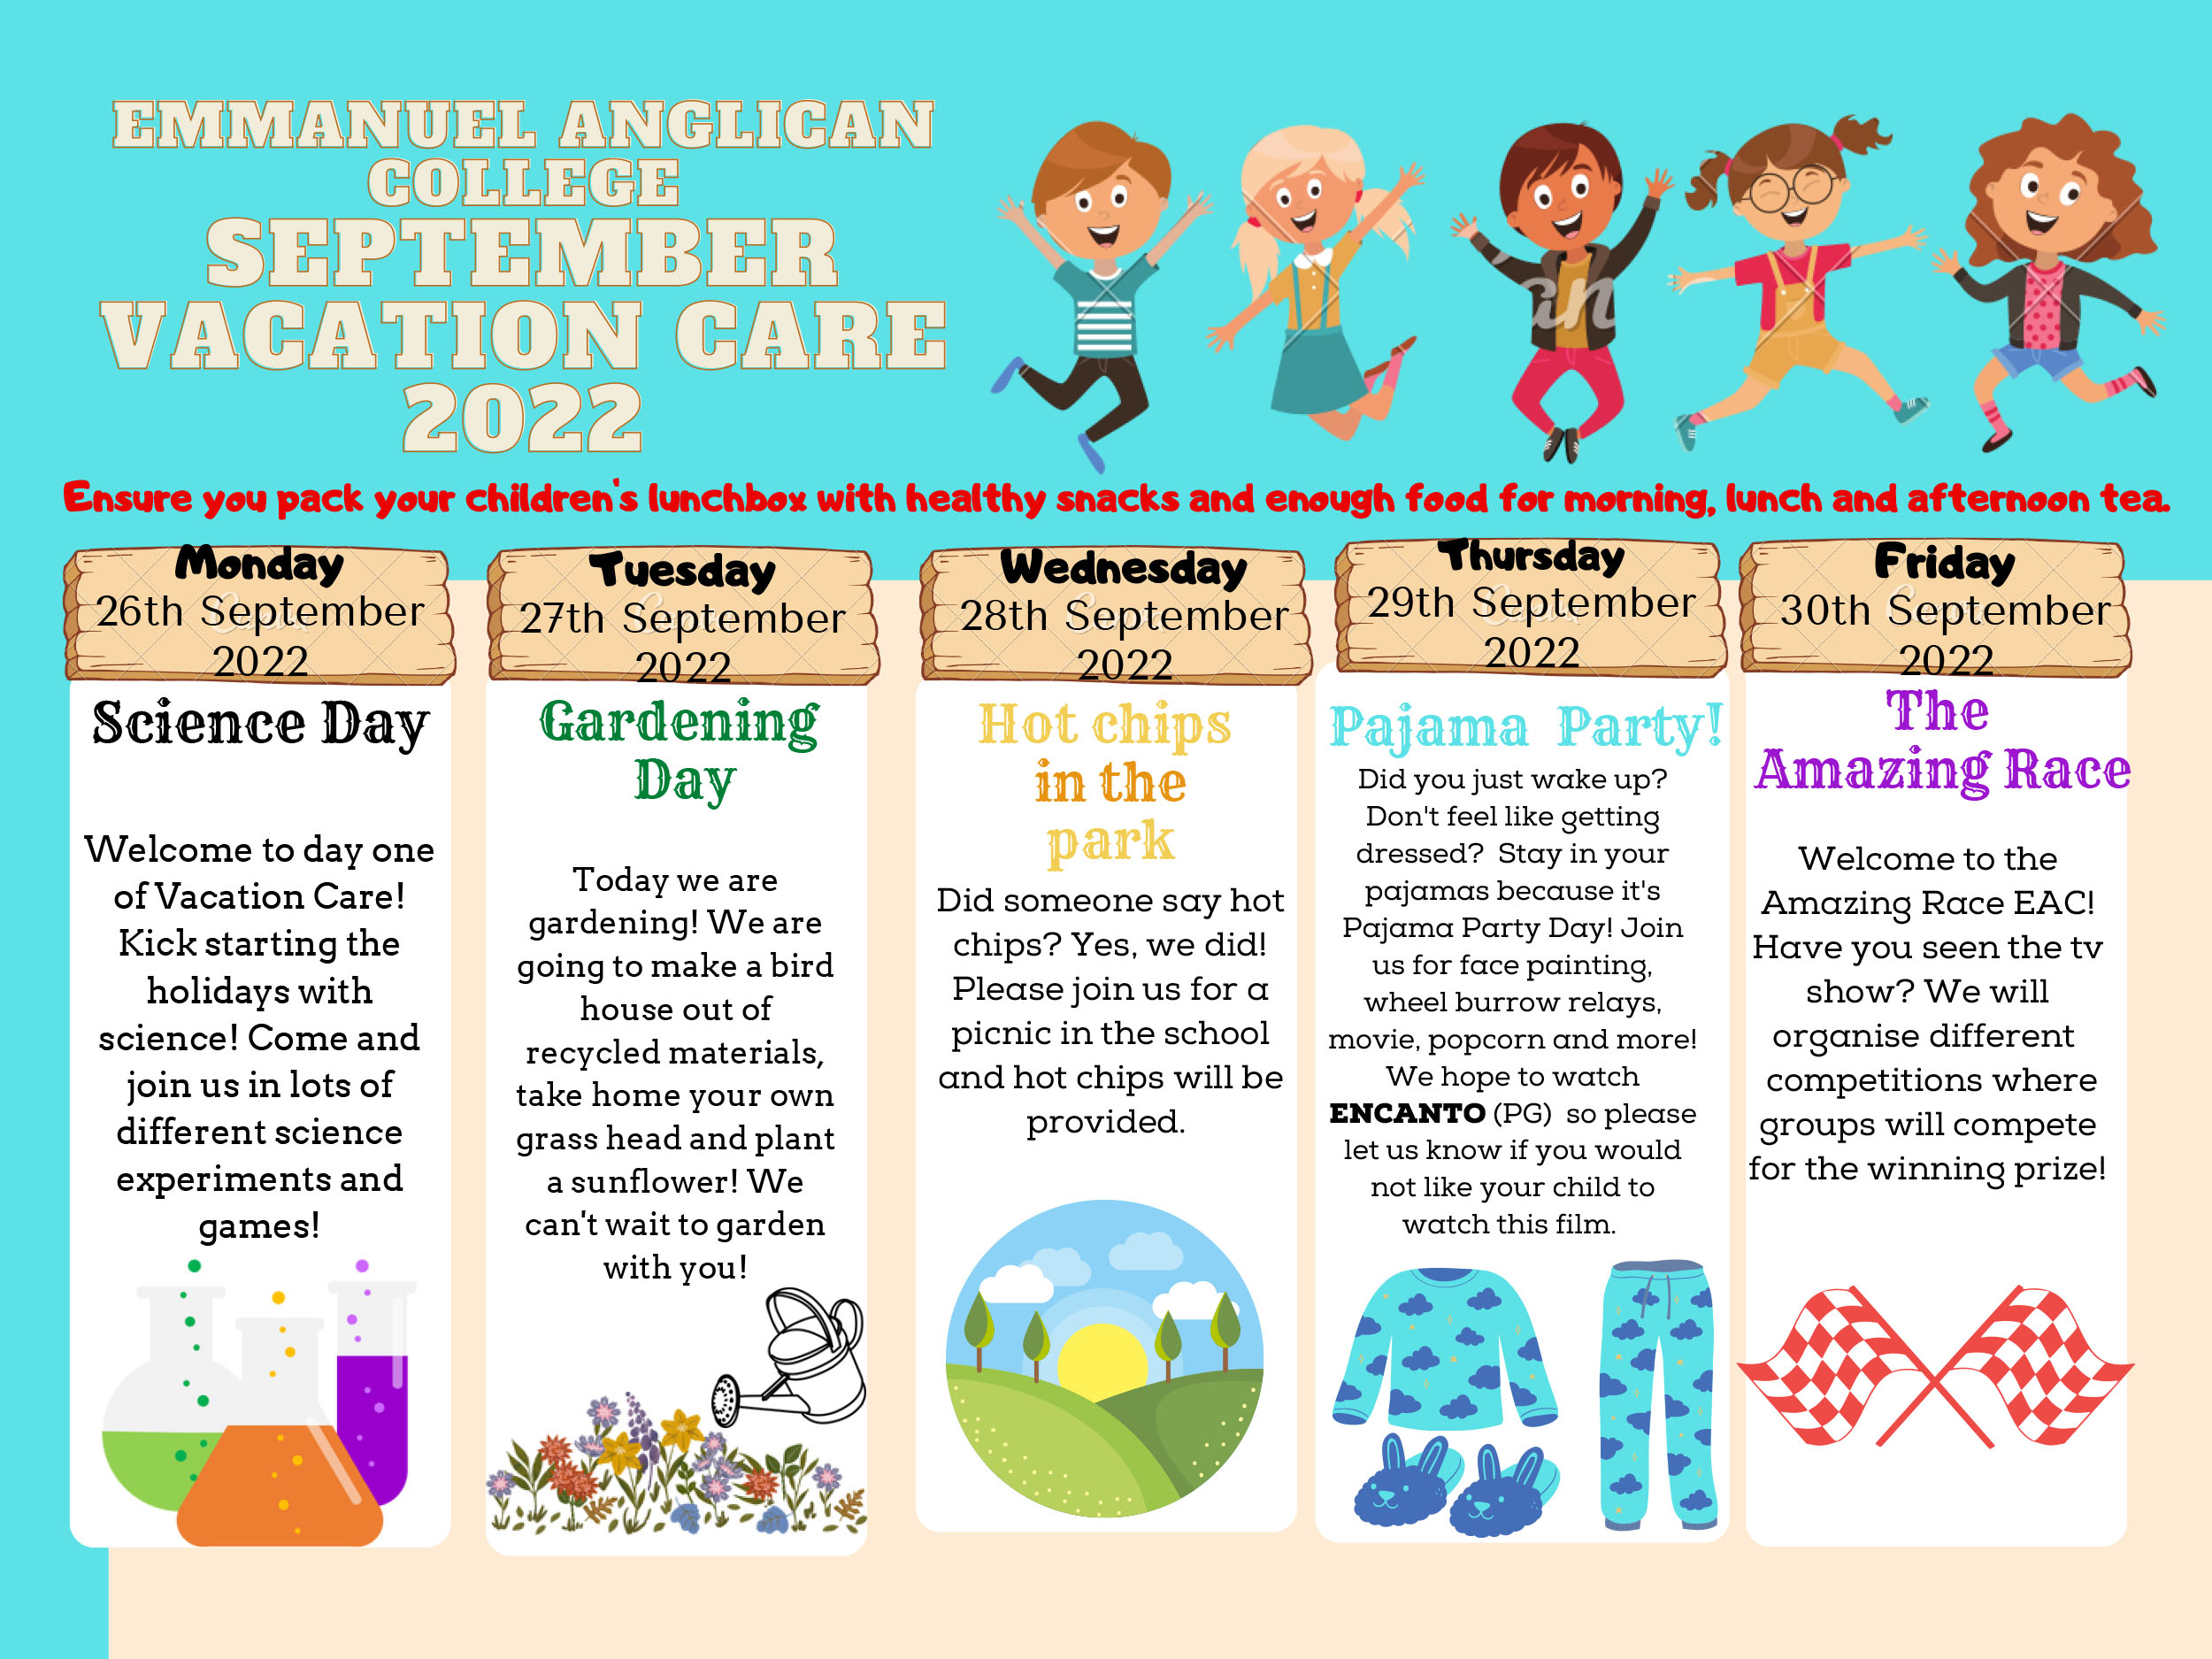 Emmanuel Anglican College Vacation Care program